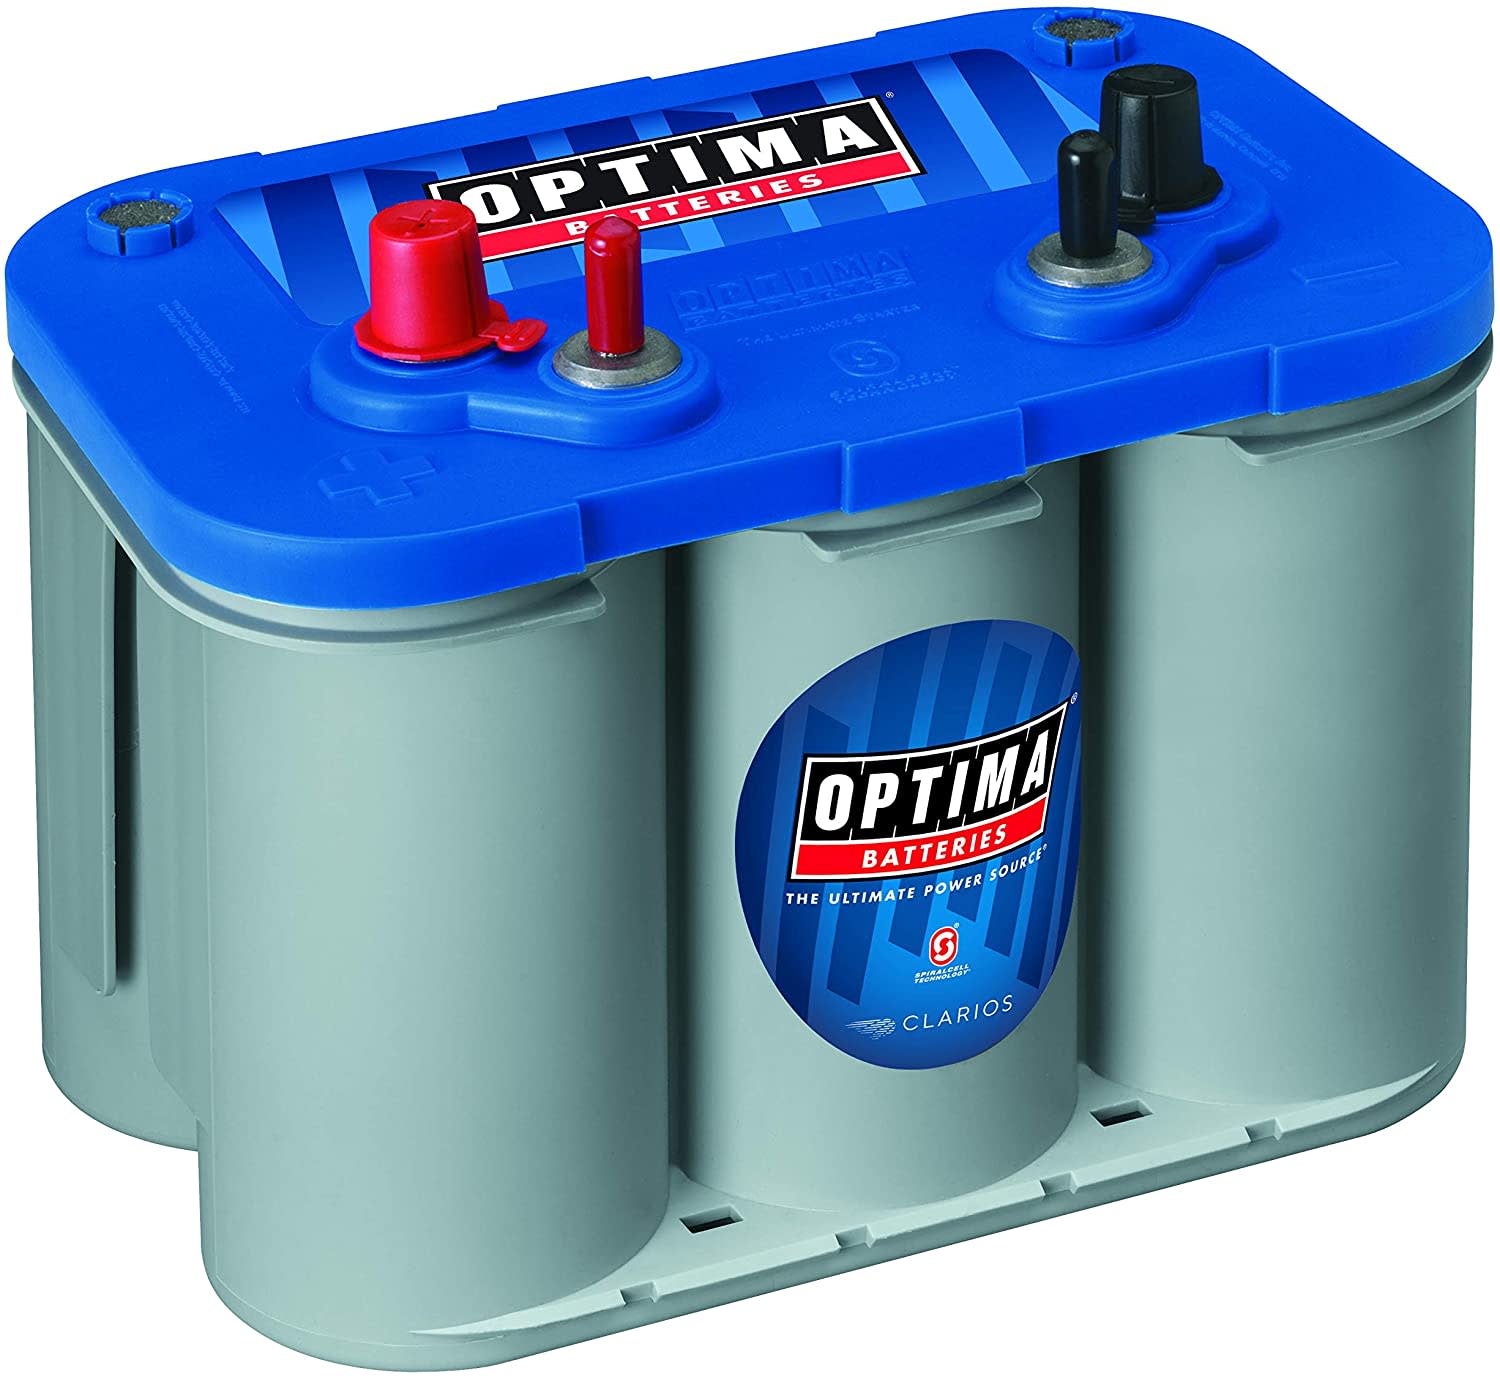 Optima Blue Top Marine - Best Battery